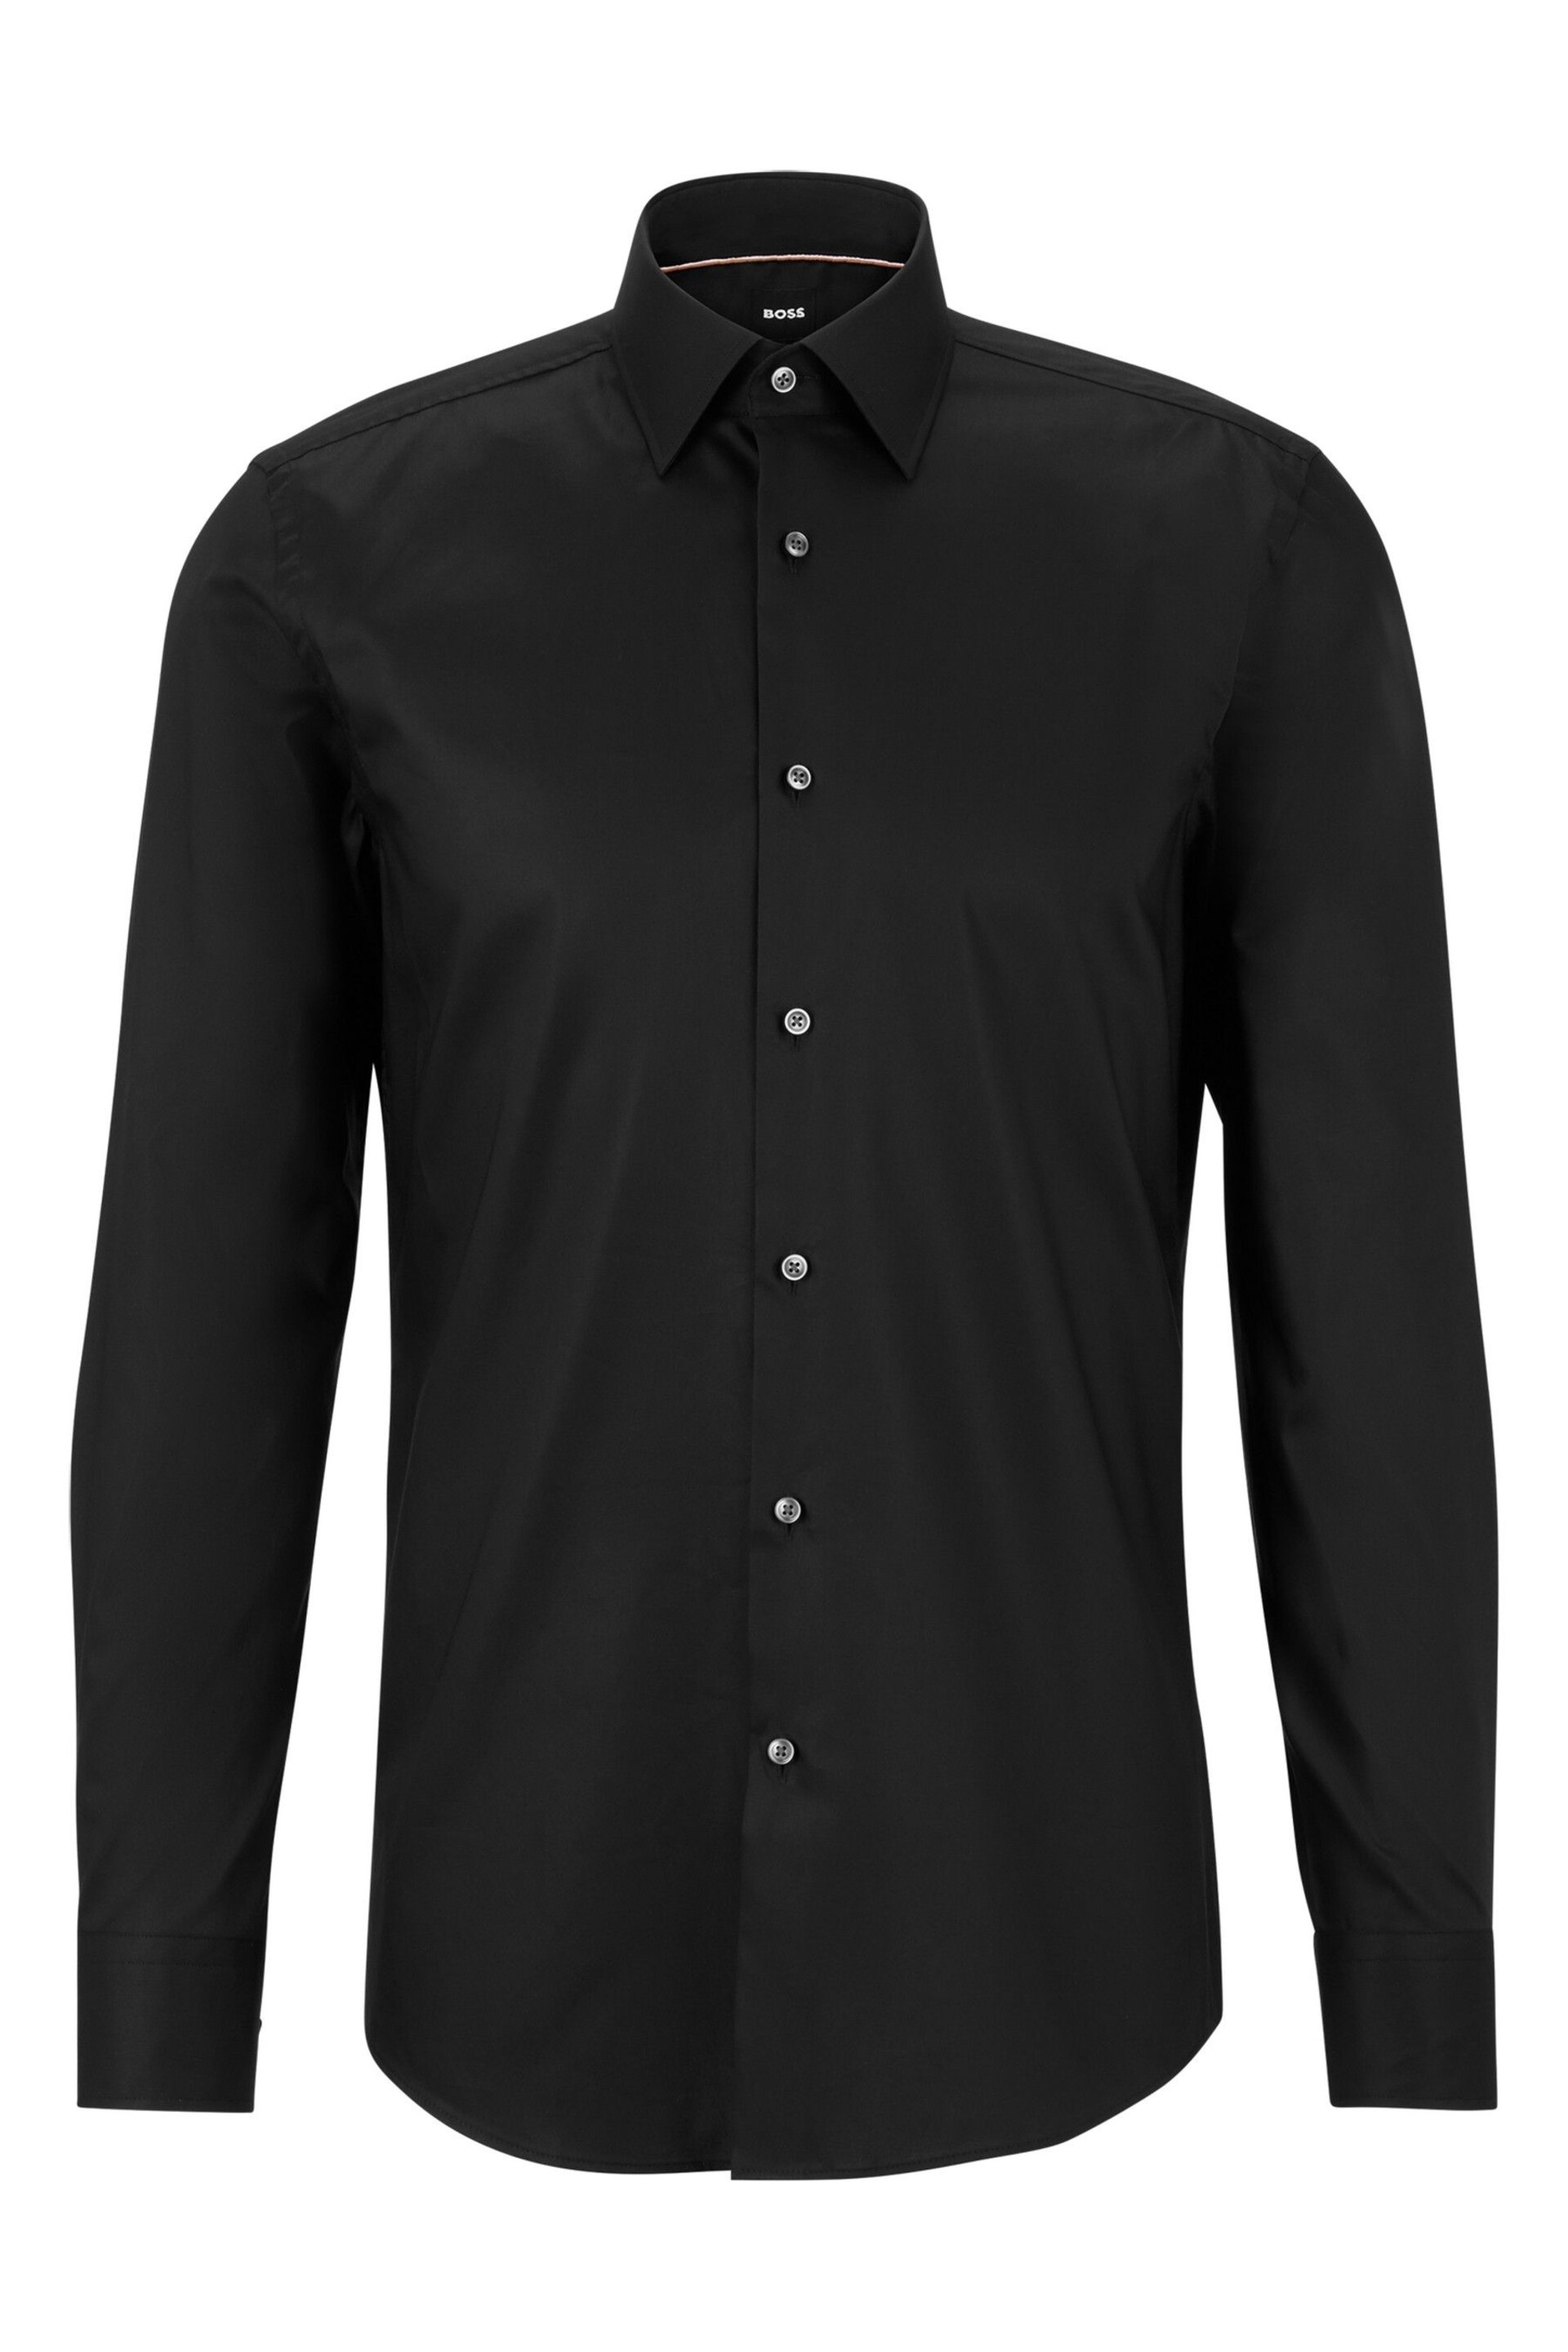 BOSS Black Slim Fit Dress Shirt - Image 6 of 6